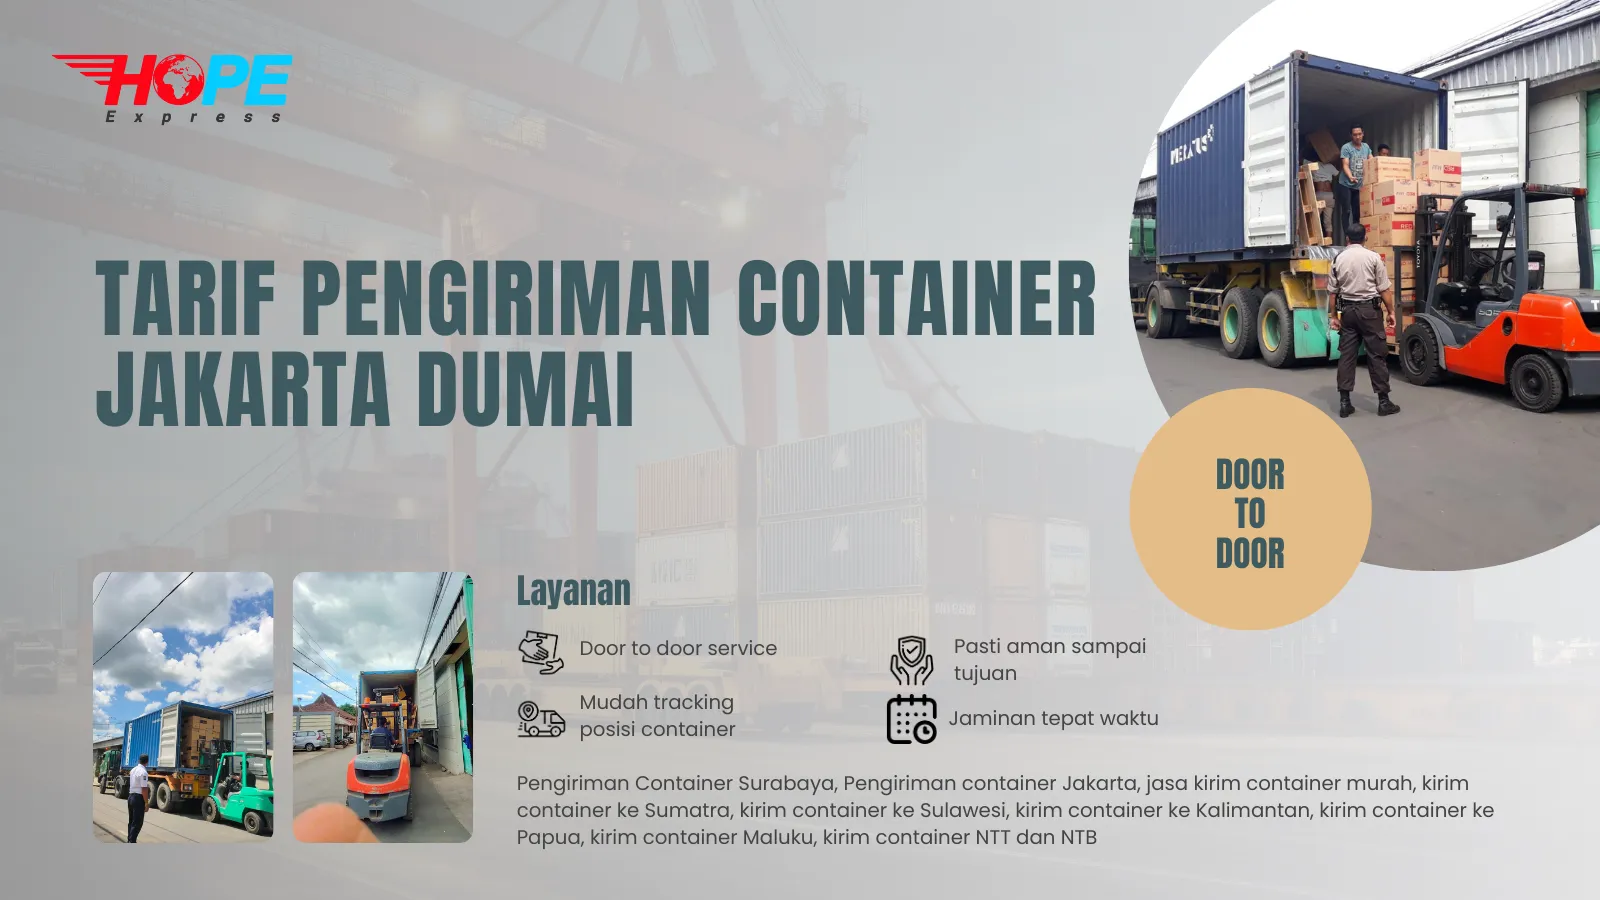 Tarif Pengiriman Container Jakarta Dumai